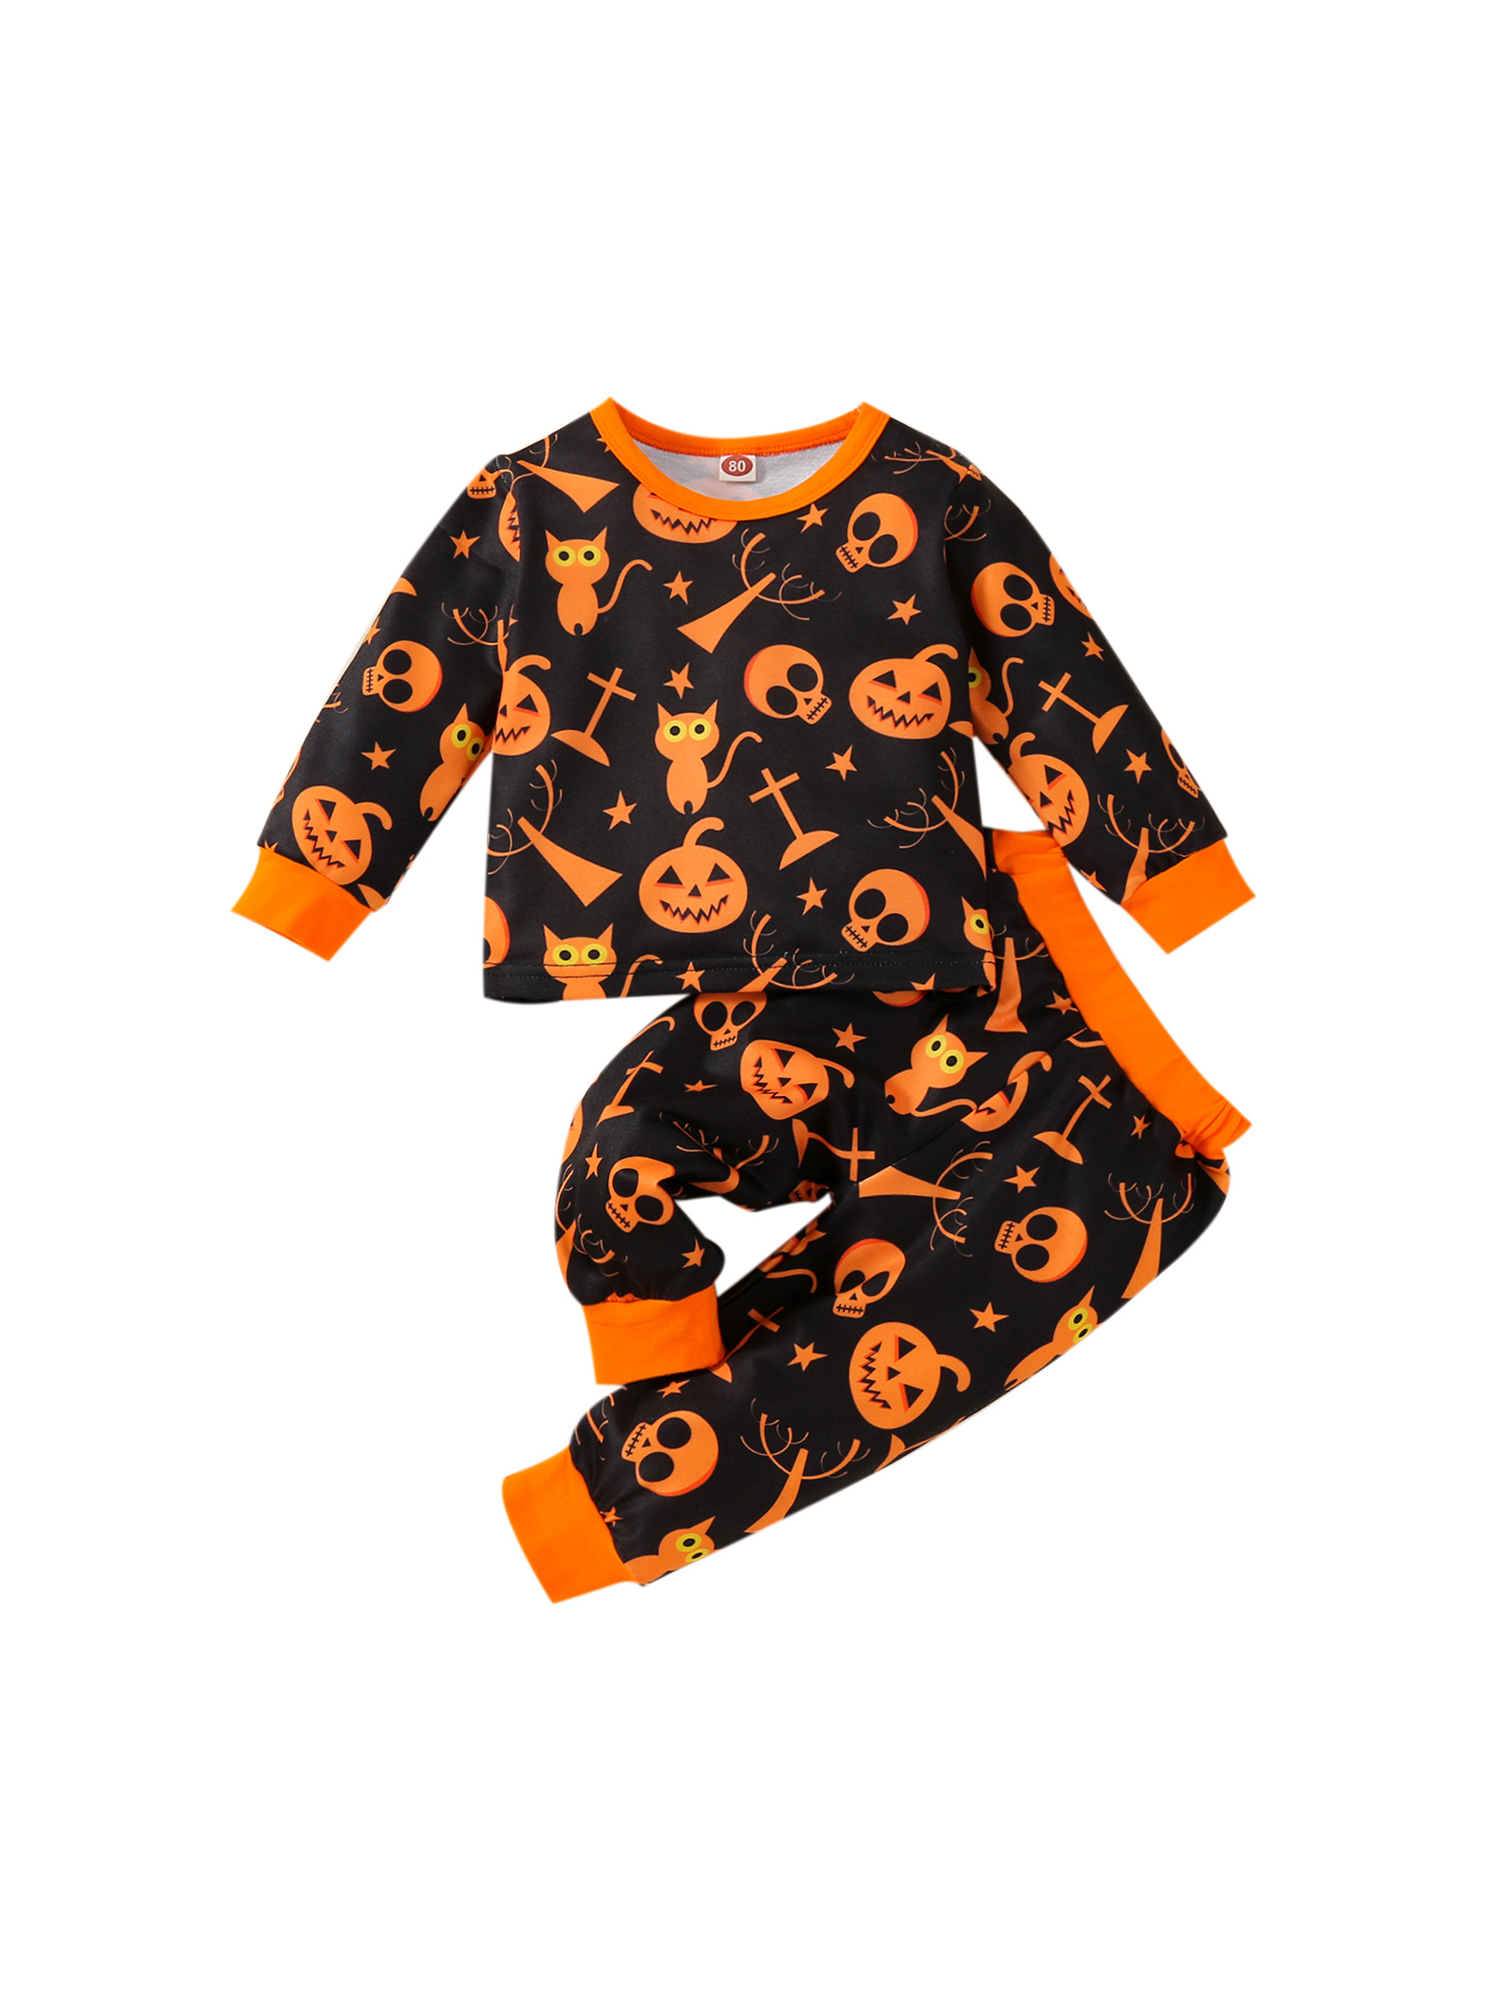 Toddler Boy Girl Halloween Clothes Pumpkin Pajamas Set Kid Long Sleeve Costume Outfits